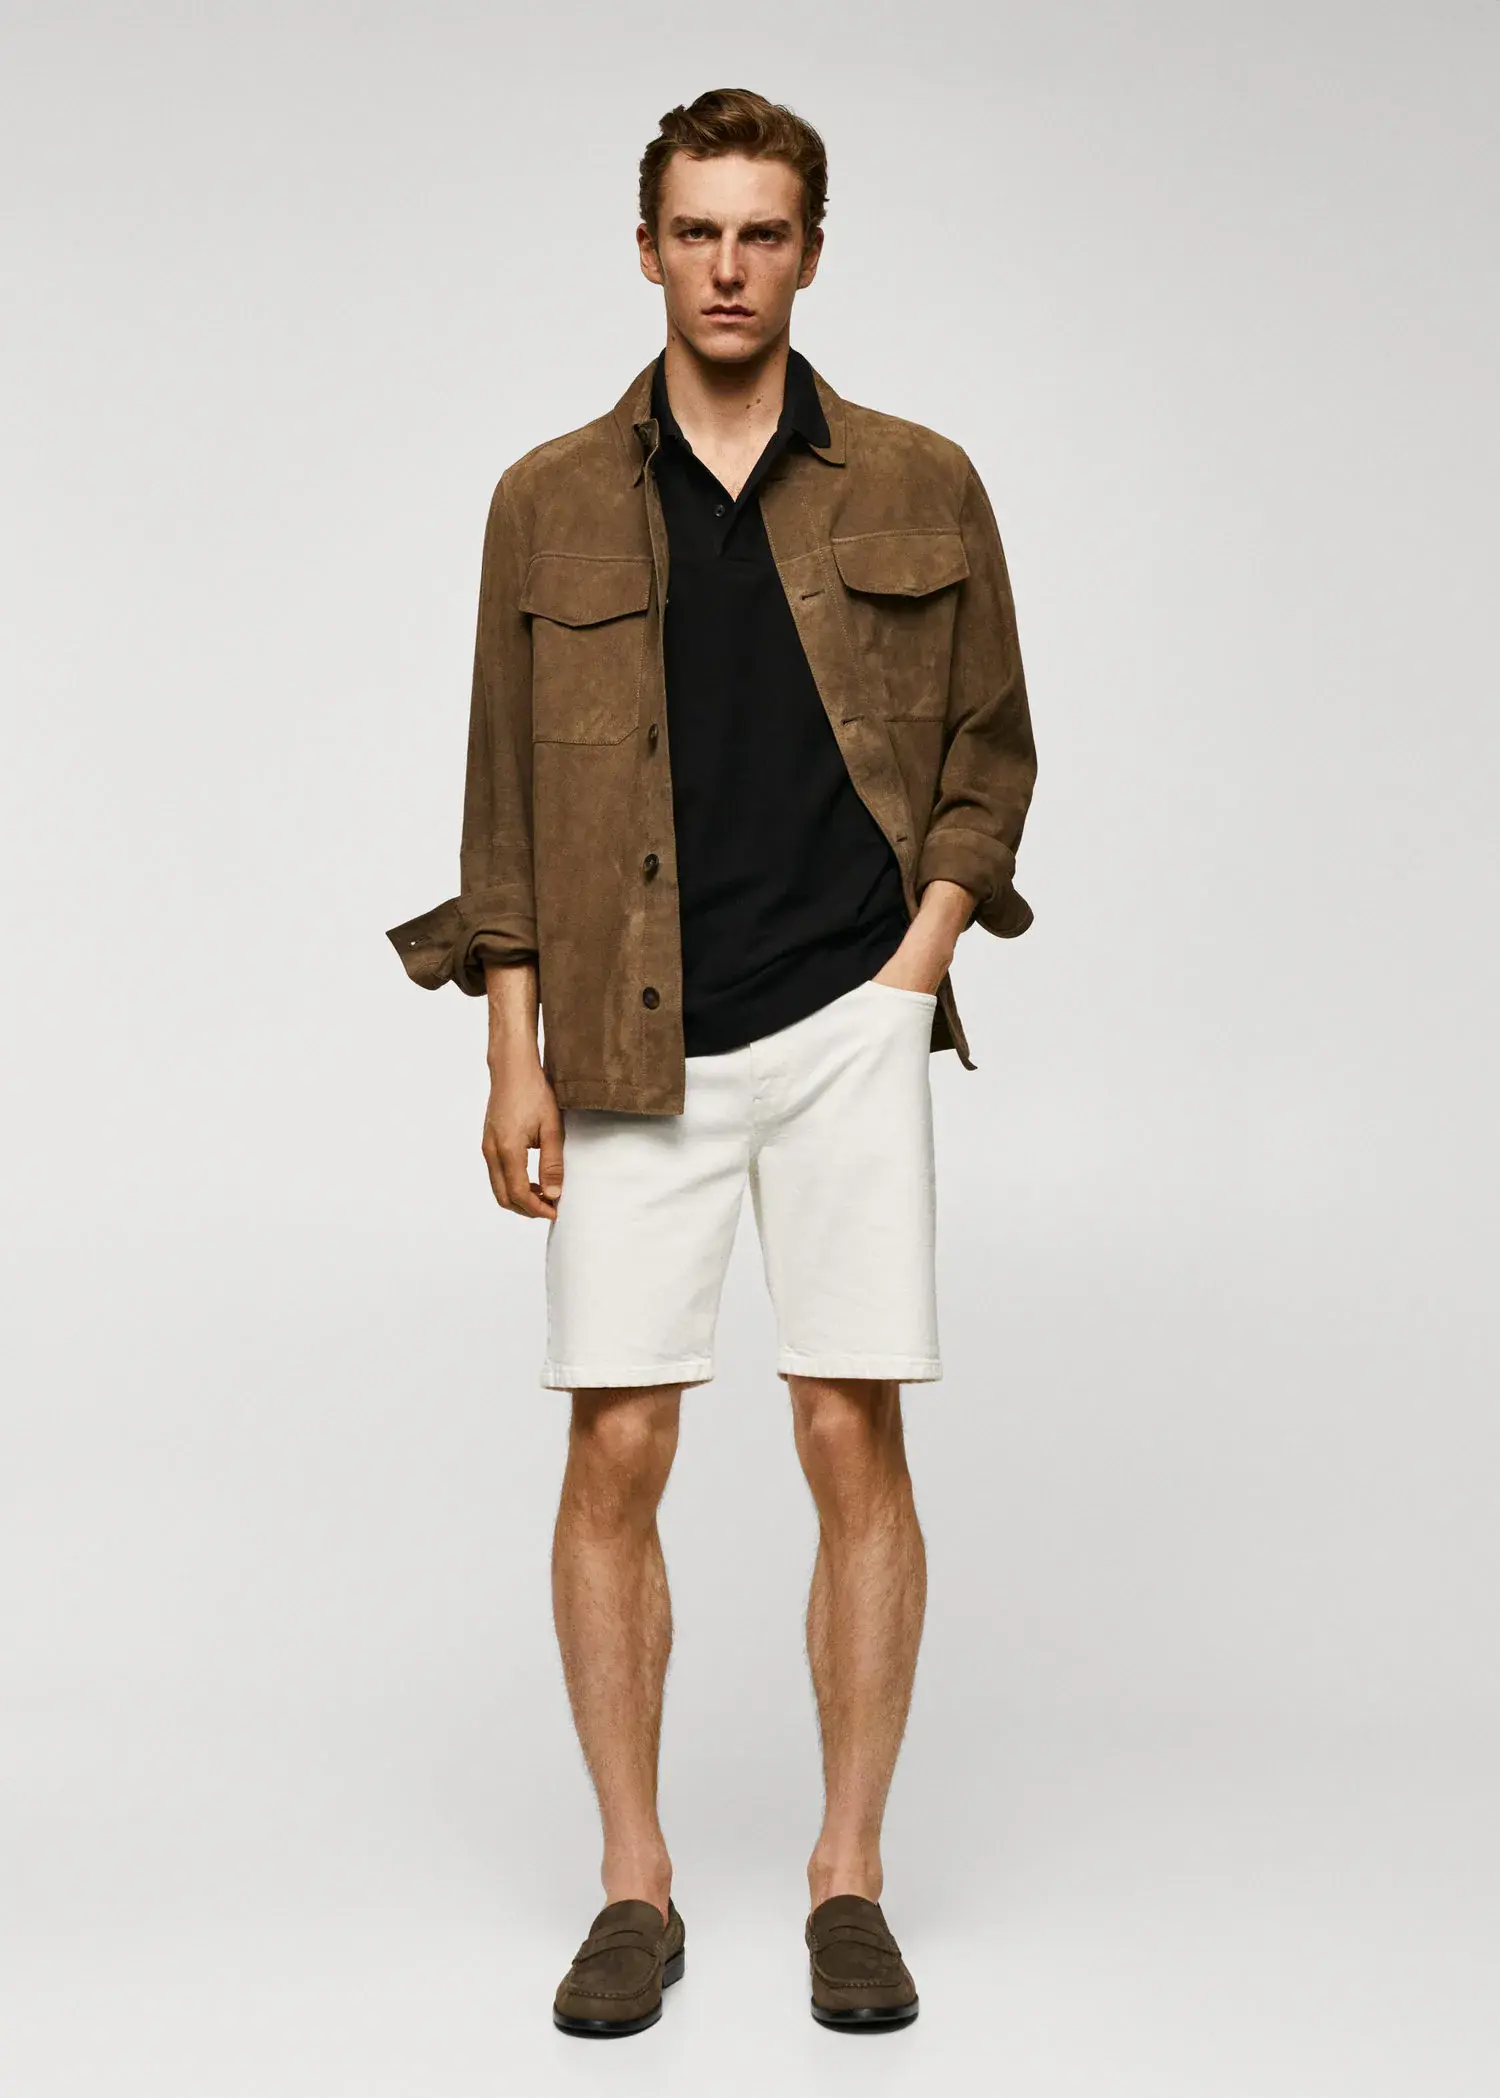 Mango 100% cotton pique polo shirt. a man in a brown jacket and white shorts. 